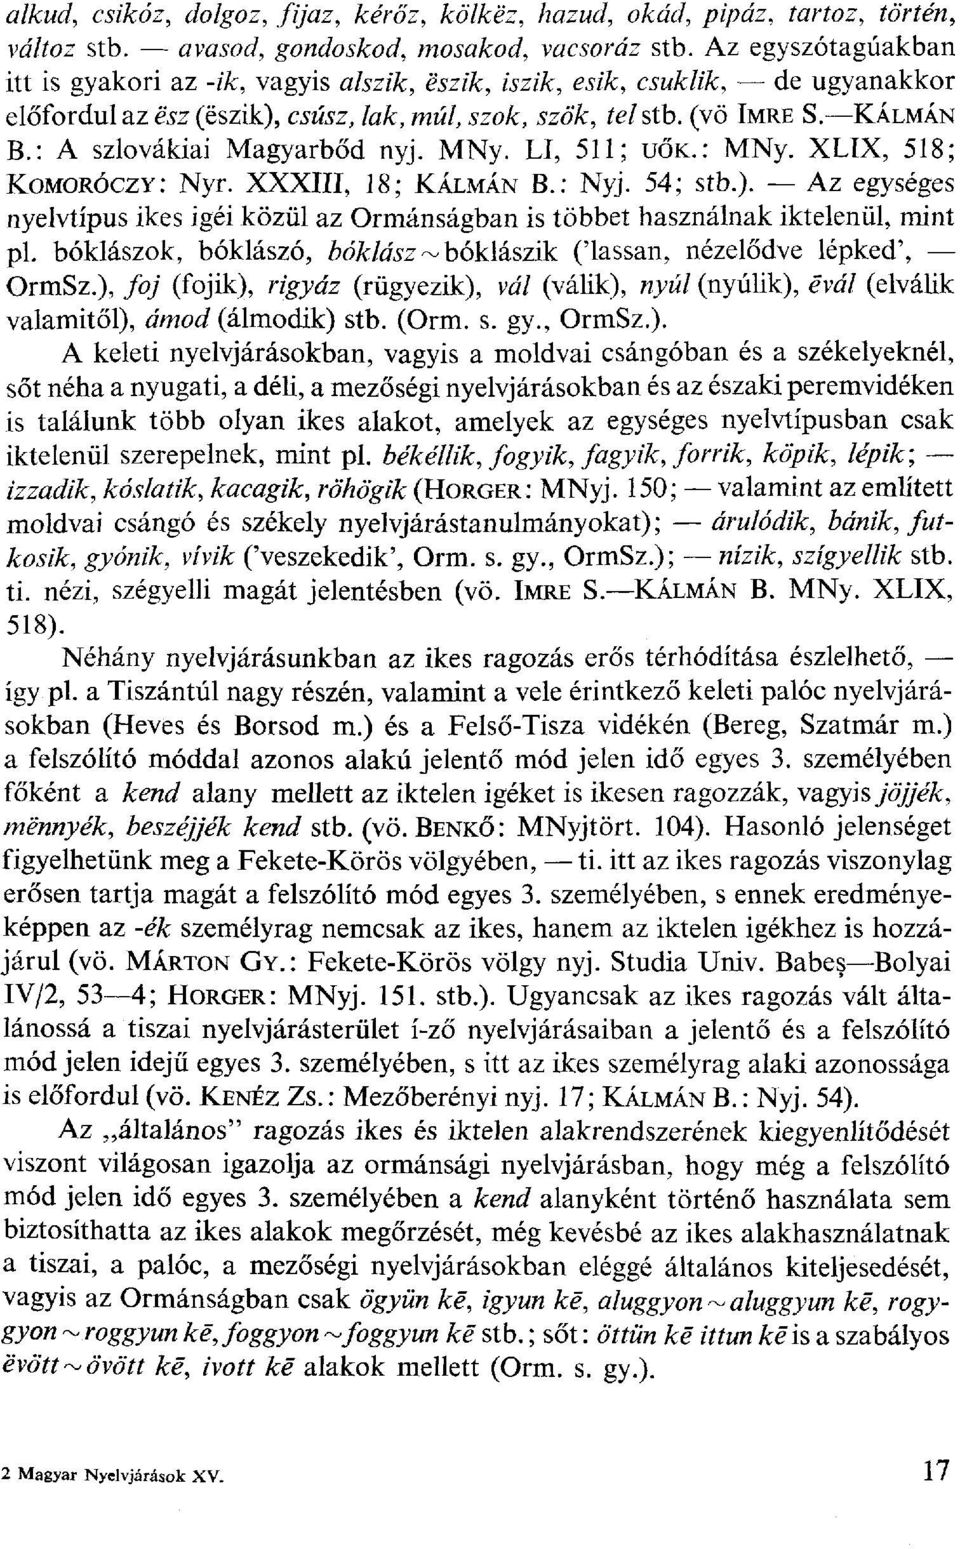 : A szlovákiai Magyarbőd nyj. MNy. LI, 5; UŐK.: MNy. XLIX, 58; KOMORÓCZY: Nyr. XXXIII, 8; KÁLMÁN B.: Nyj. 54; stb.).